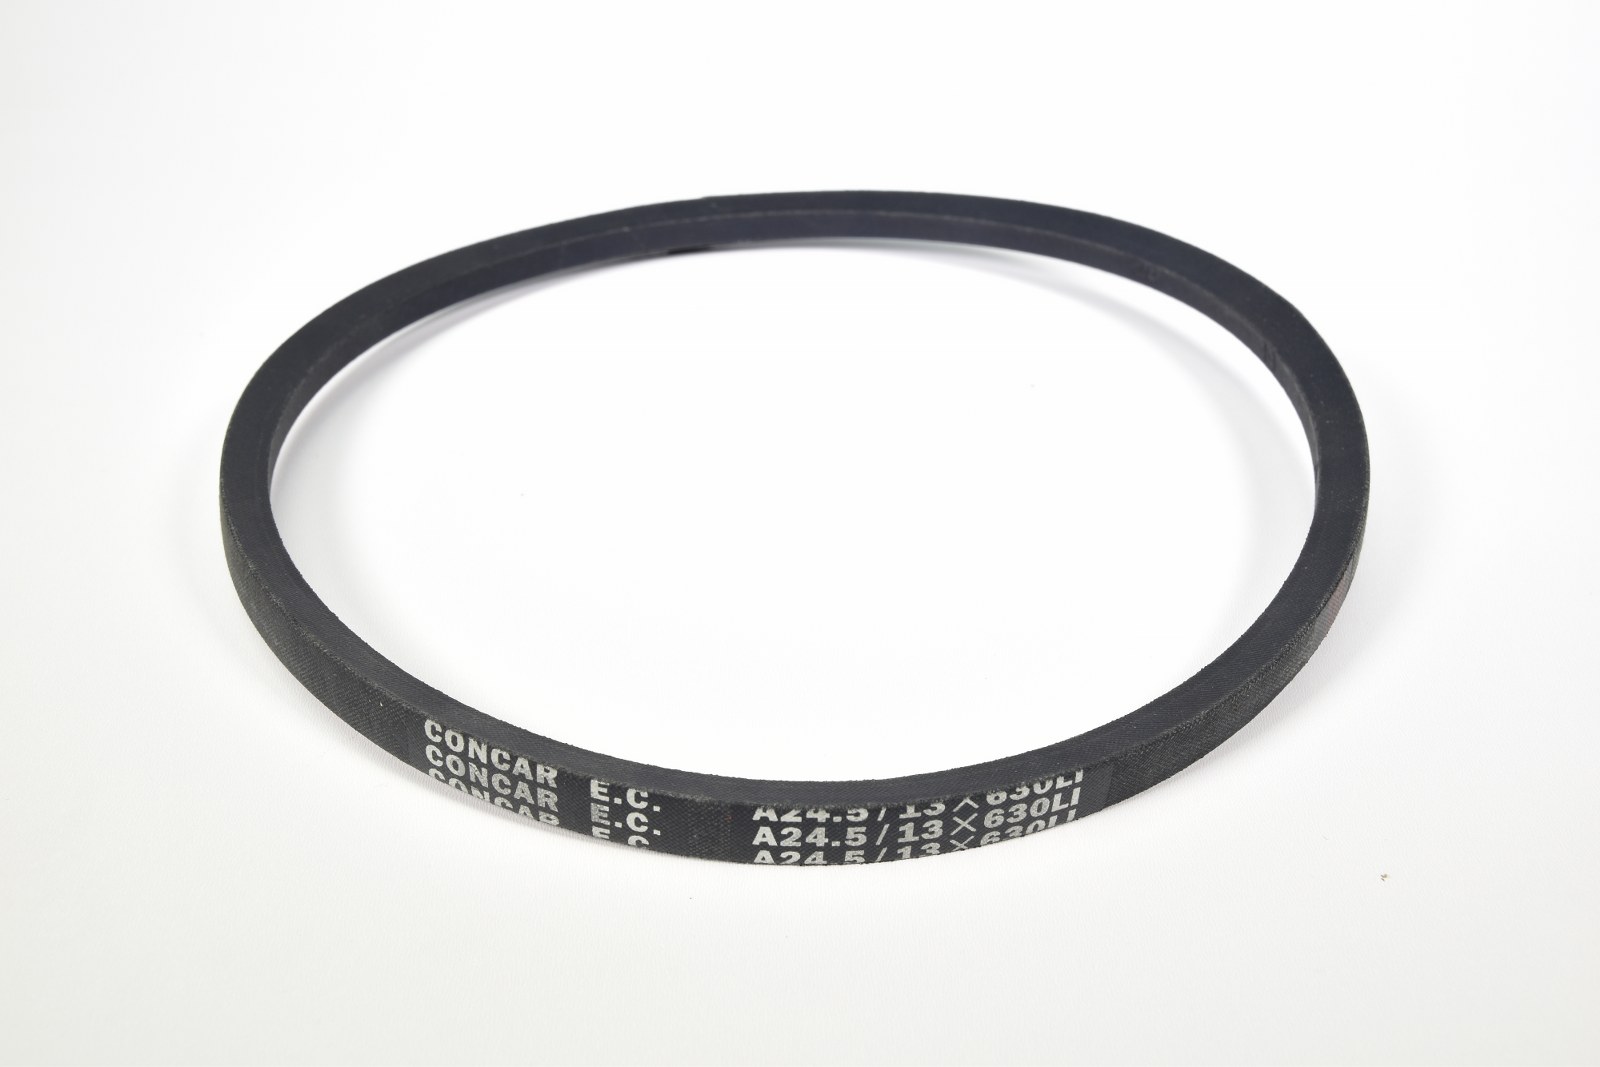 Details about   Concar NEW A24.5 V-belt-13 x 630 Li A24 1/2 